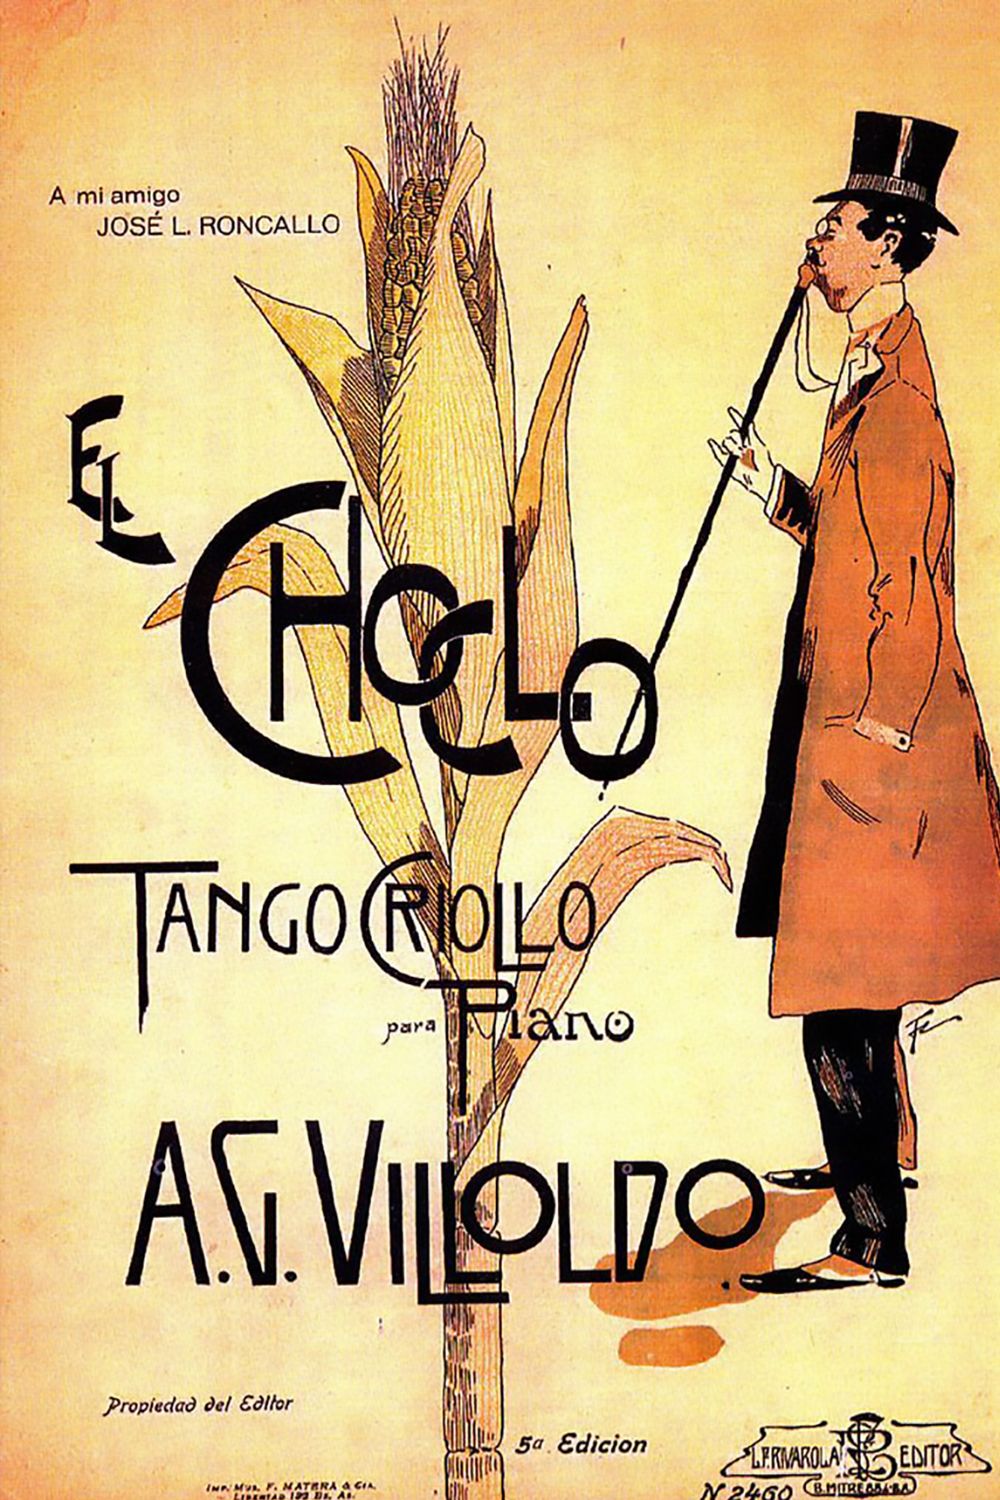 El Choclo, tapa de la partitura musical del Tango.